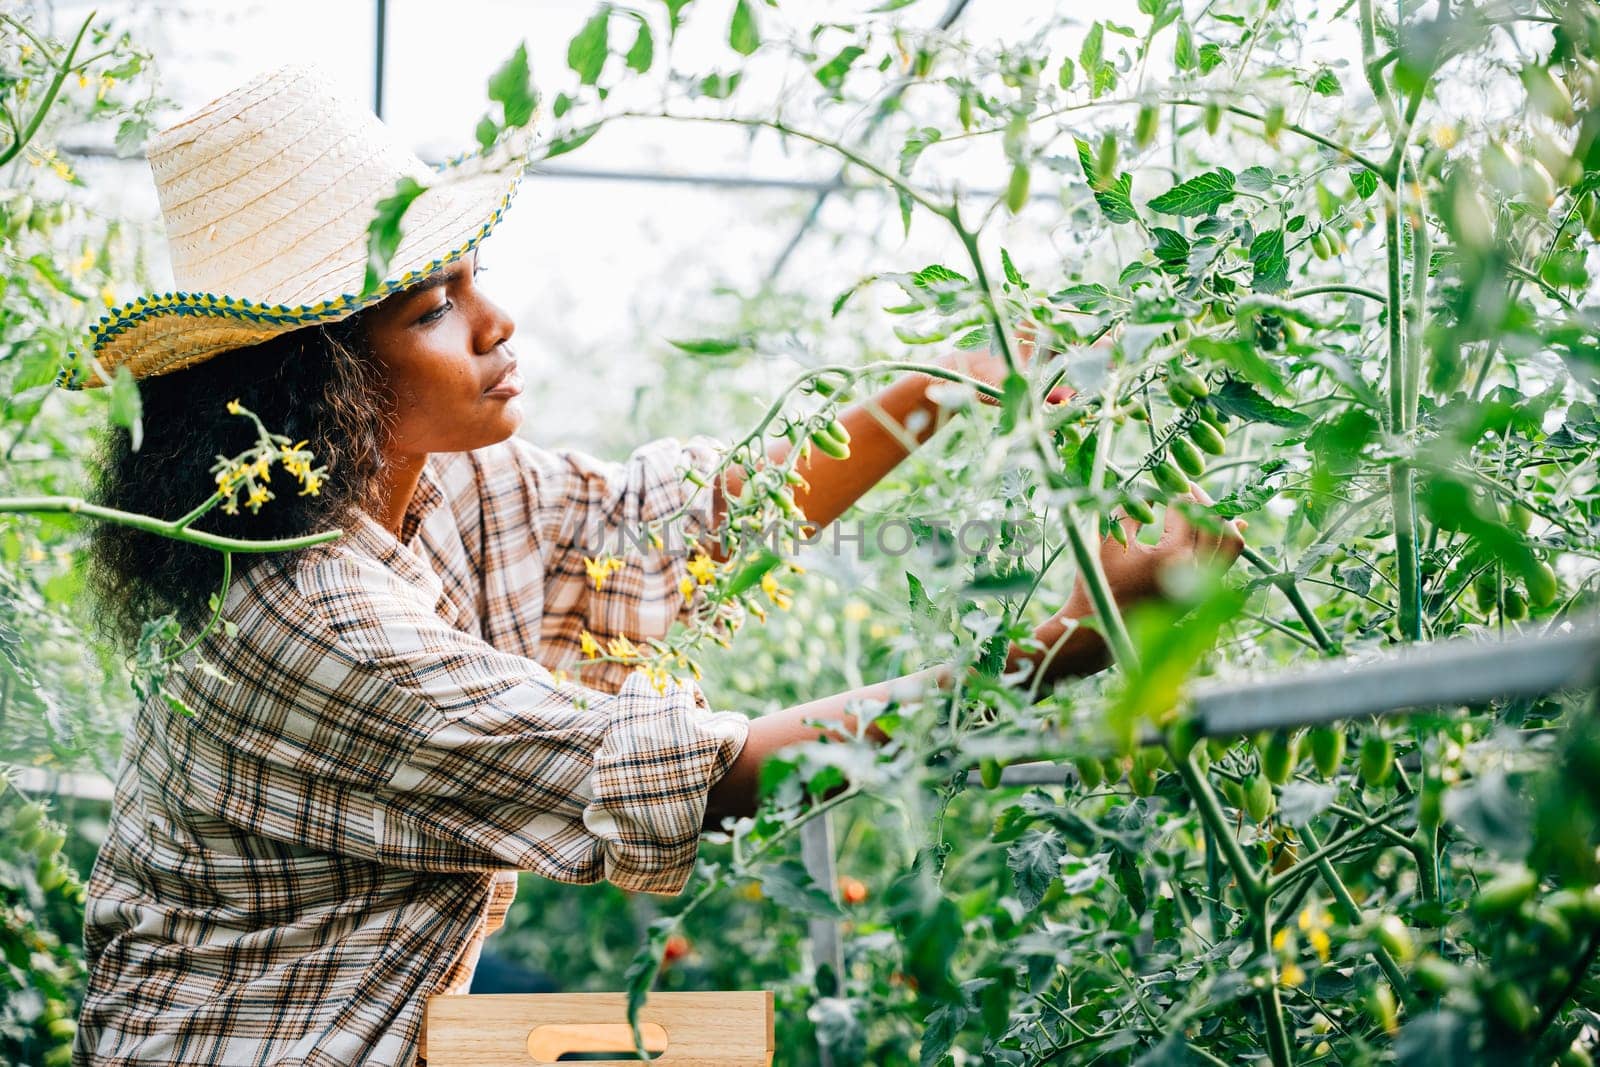 A black woman farmer uses a spray bottle to water tomato plants in a greenhouse by Sorapop